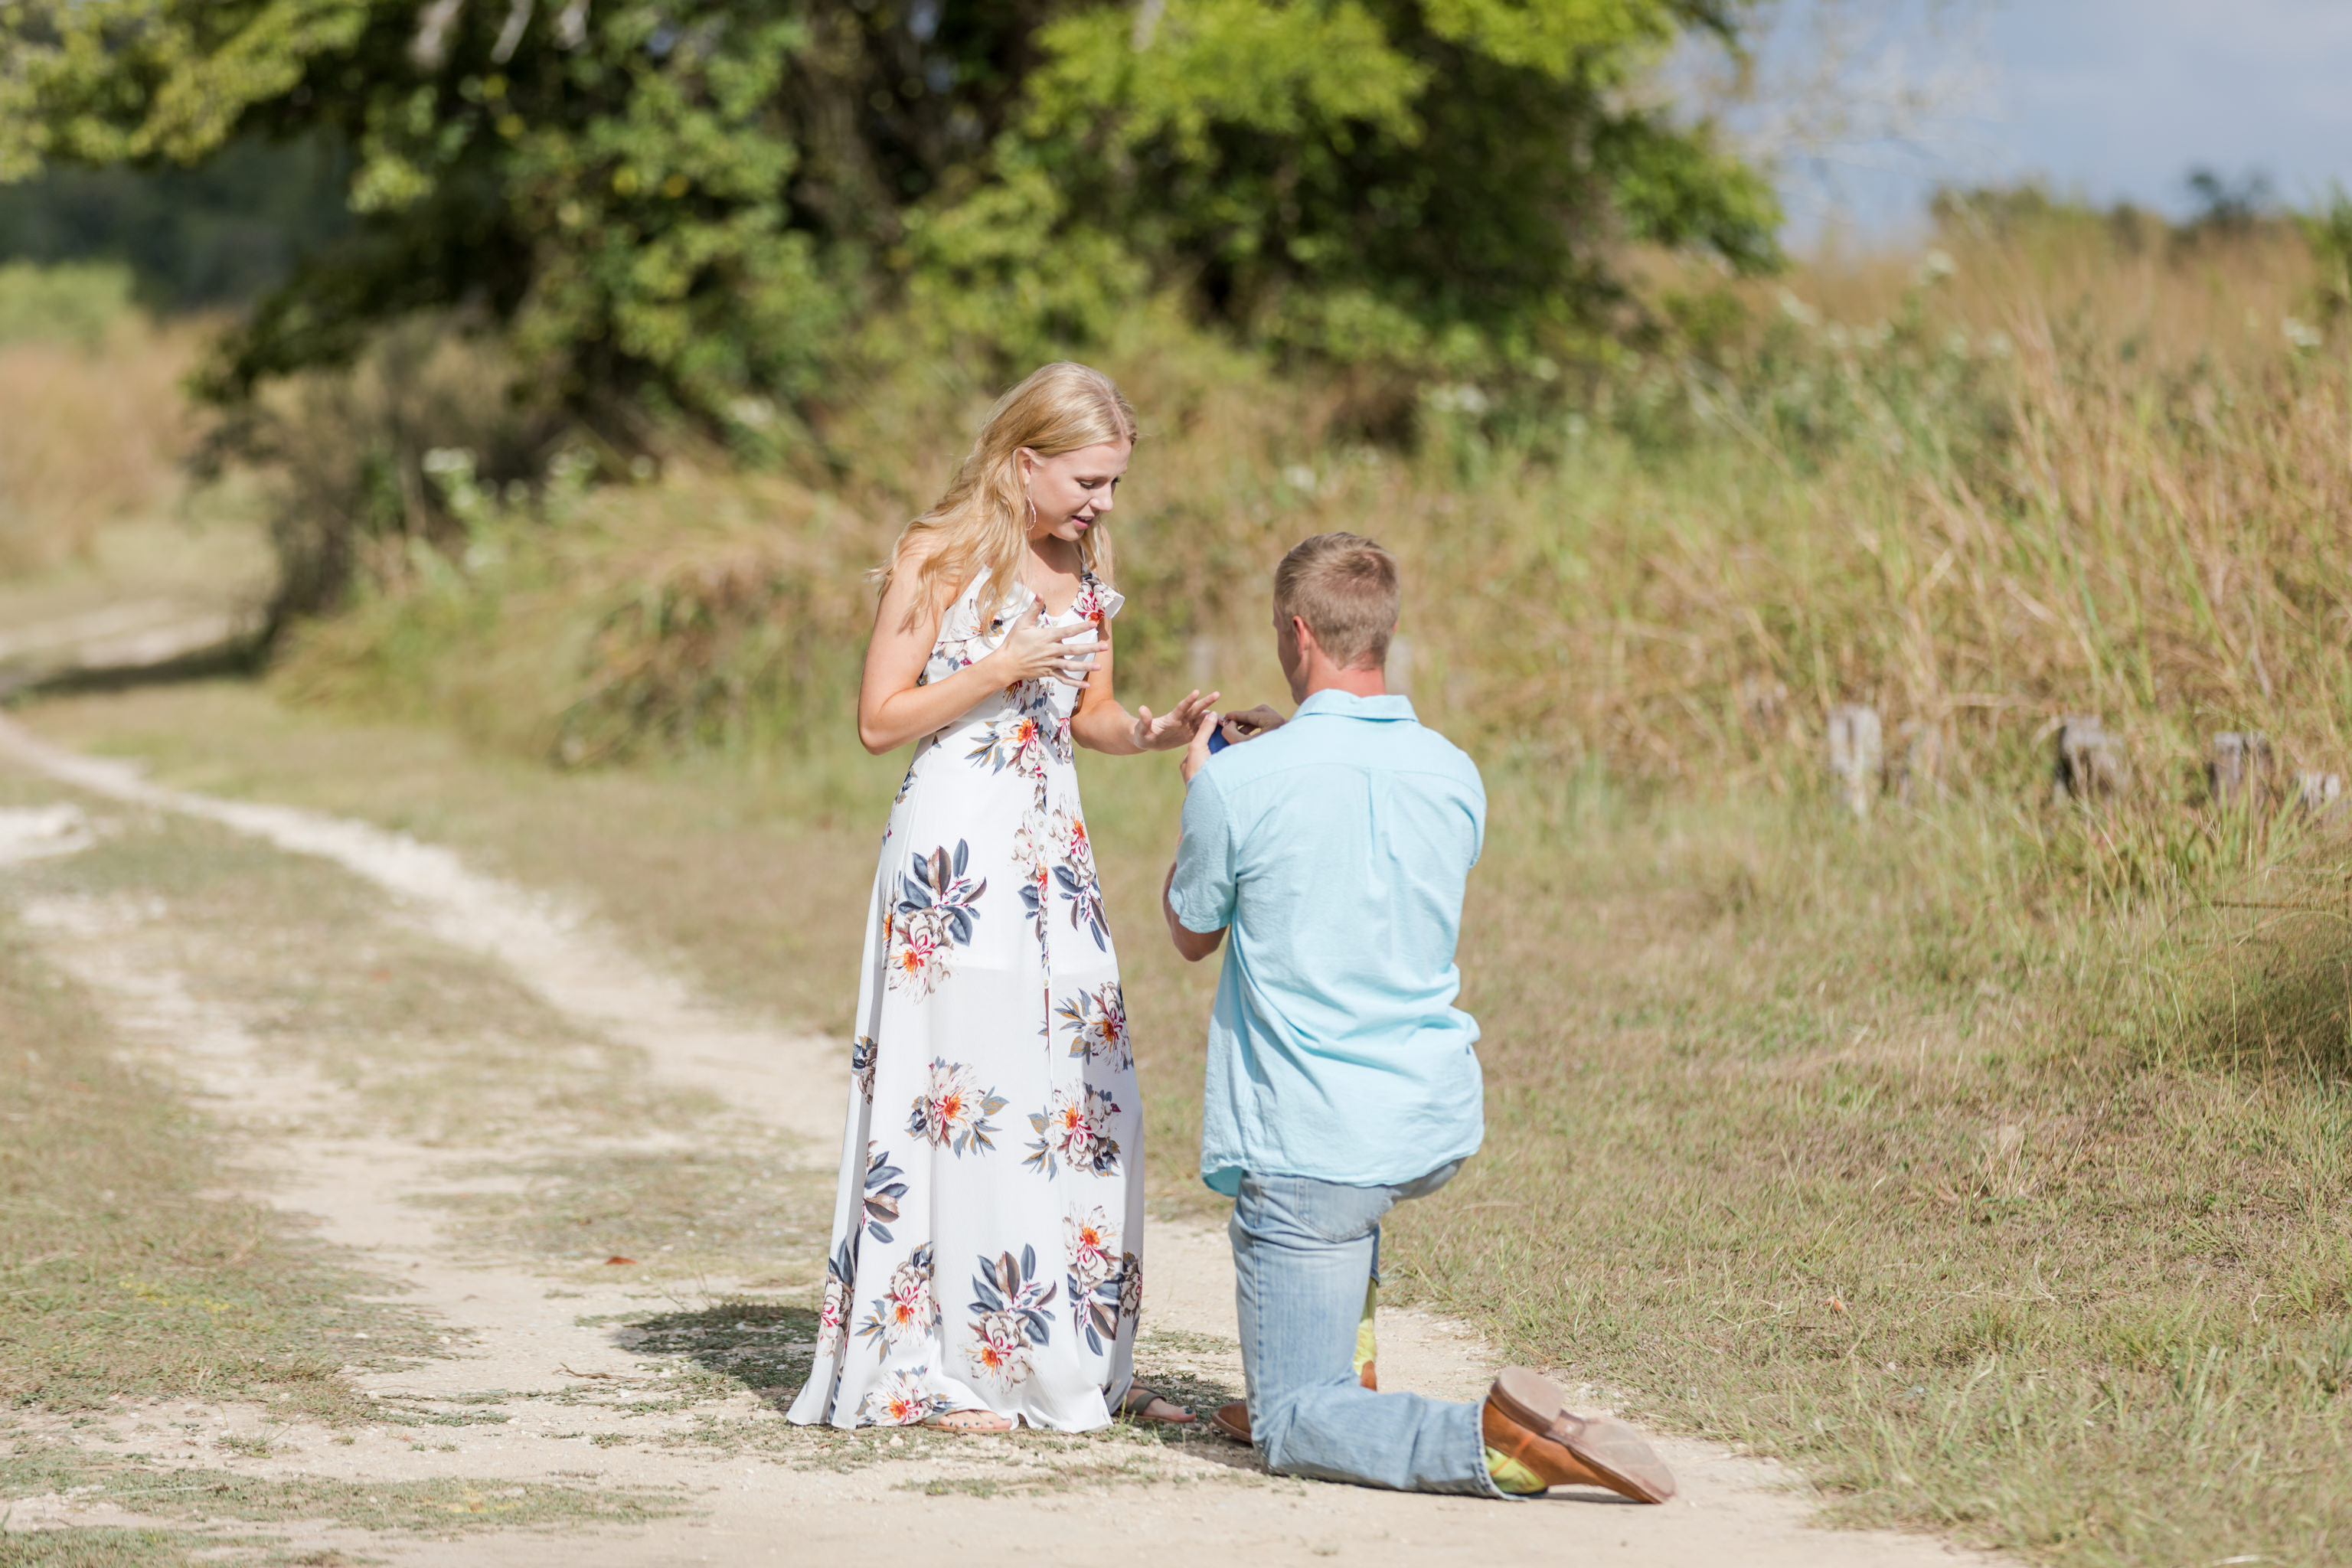 A Proposal at Cibolo Nature Center by Dawn Elizabeth Studios, San Antonio Wedding Photographer